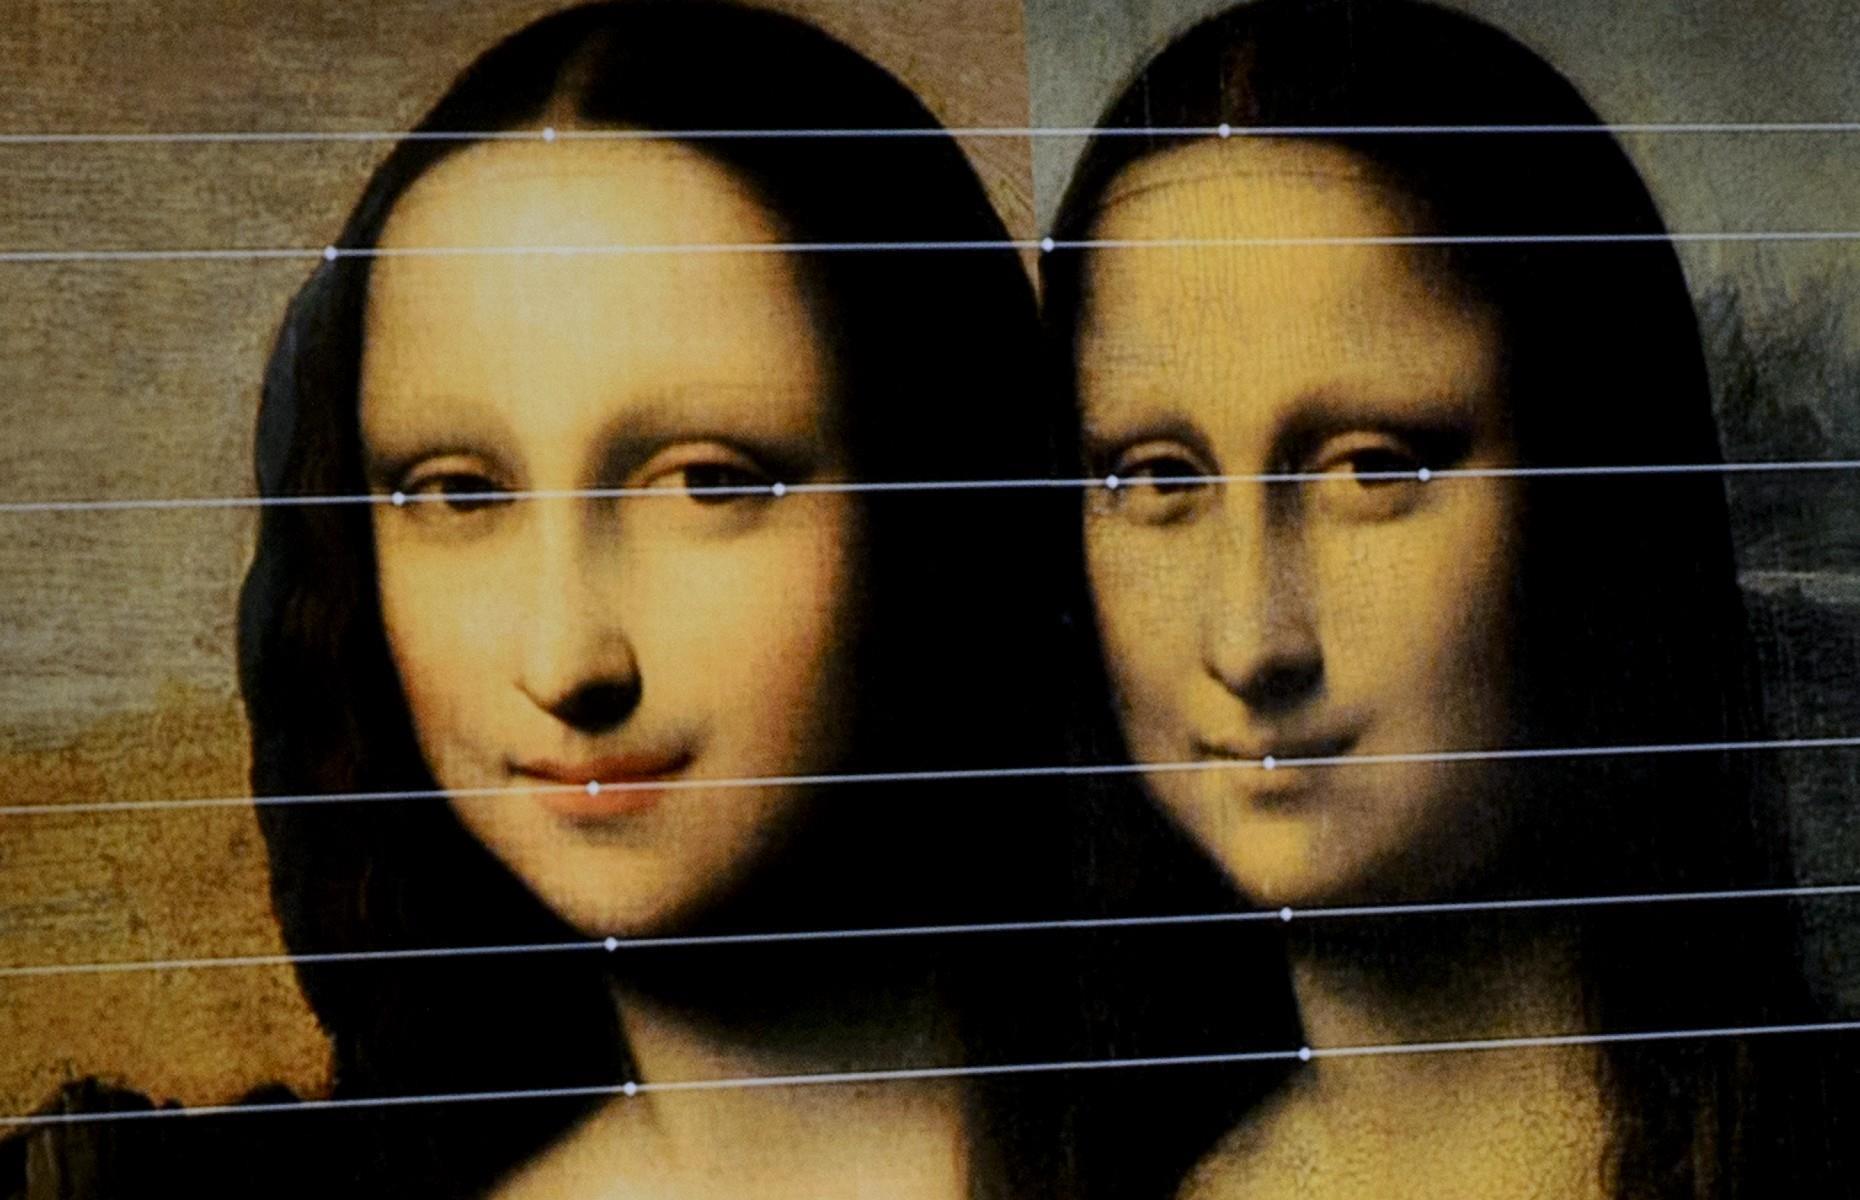 More than one Mona Lisa